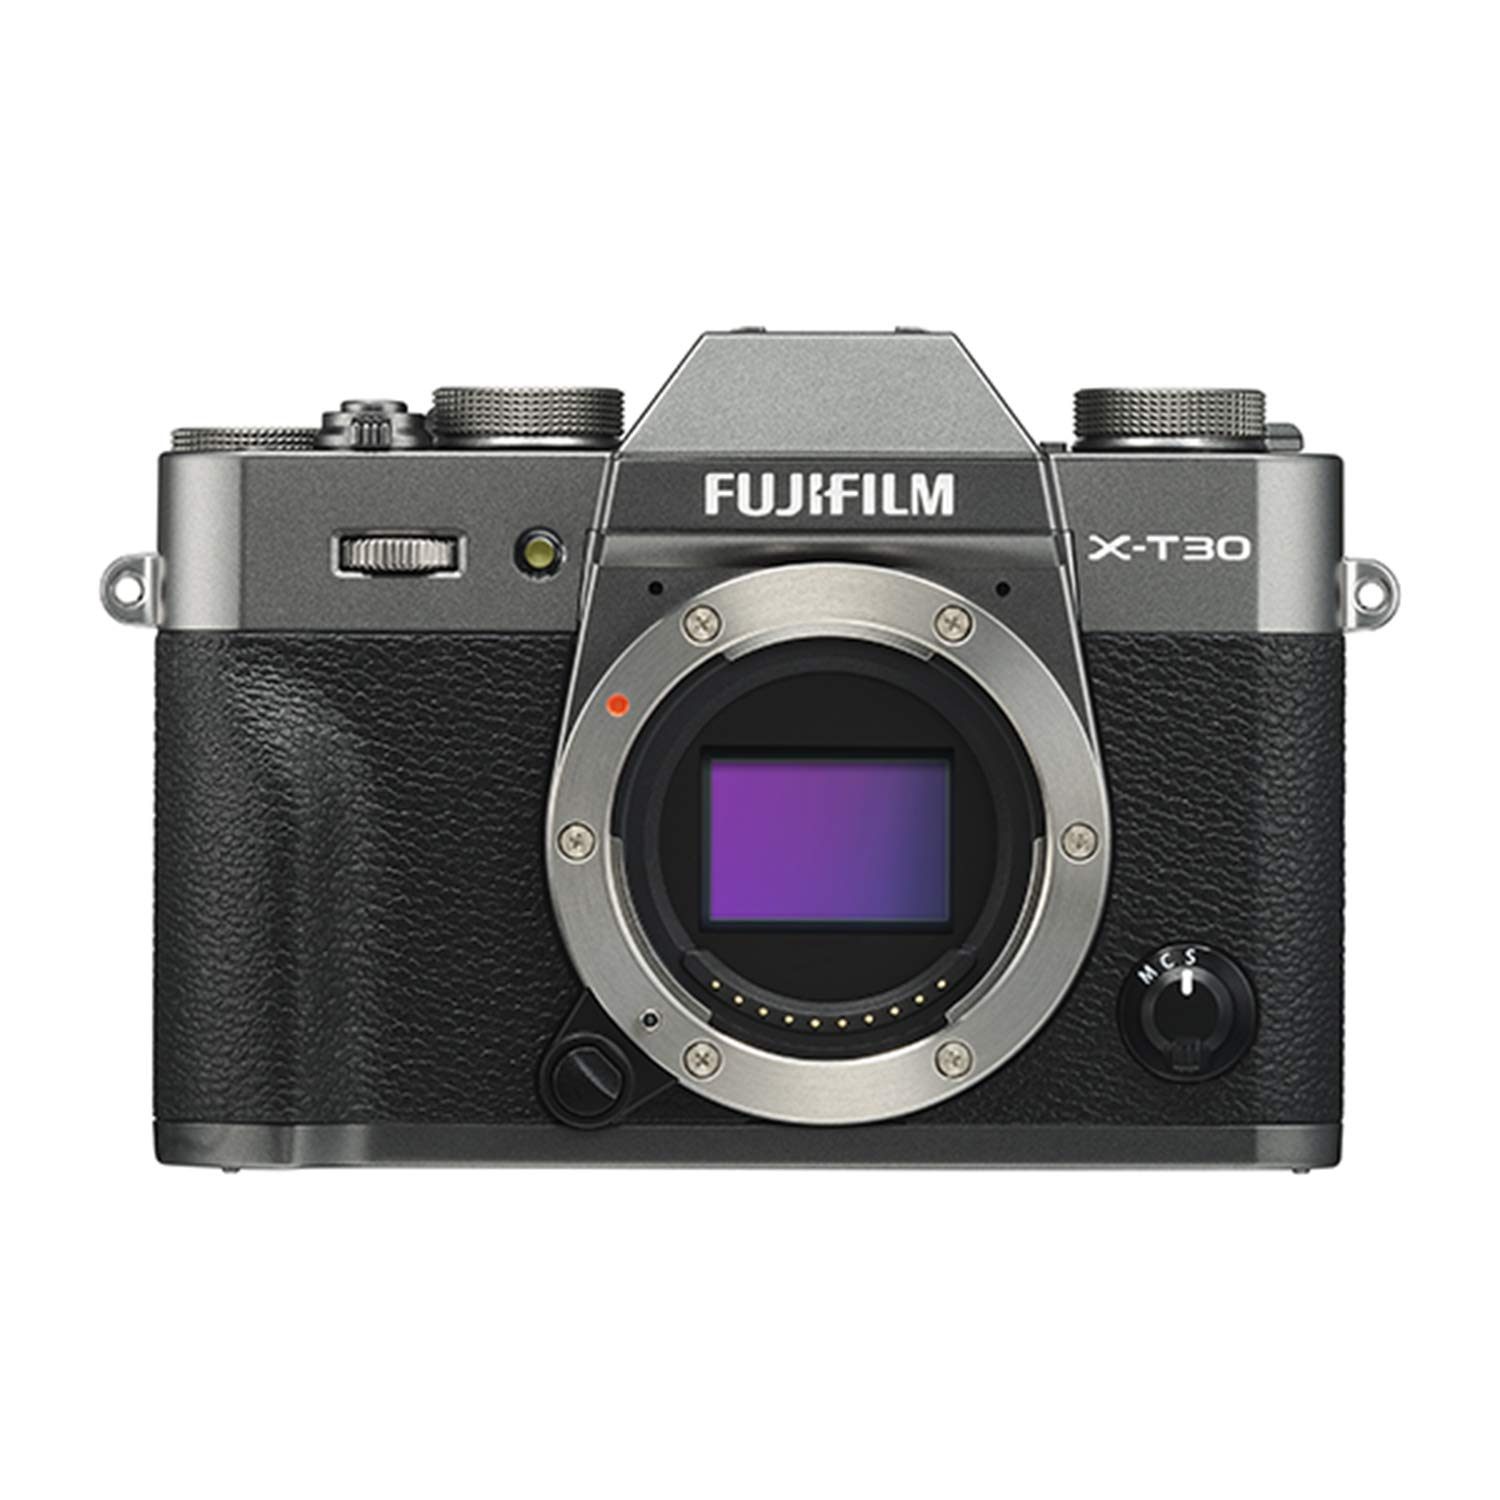 Fujifilm X-T30 Mirrorless Digital Camera Body - Charcoa...